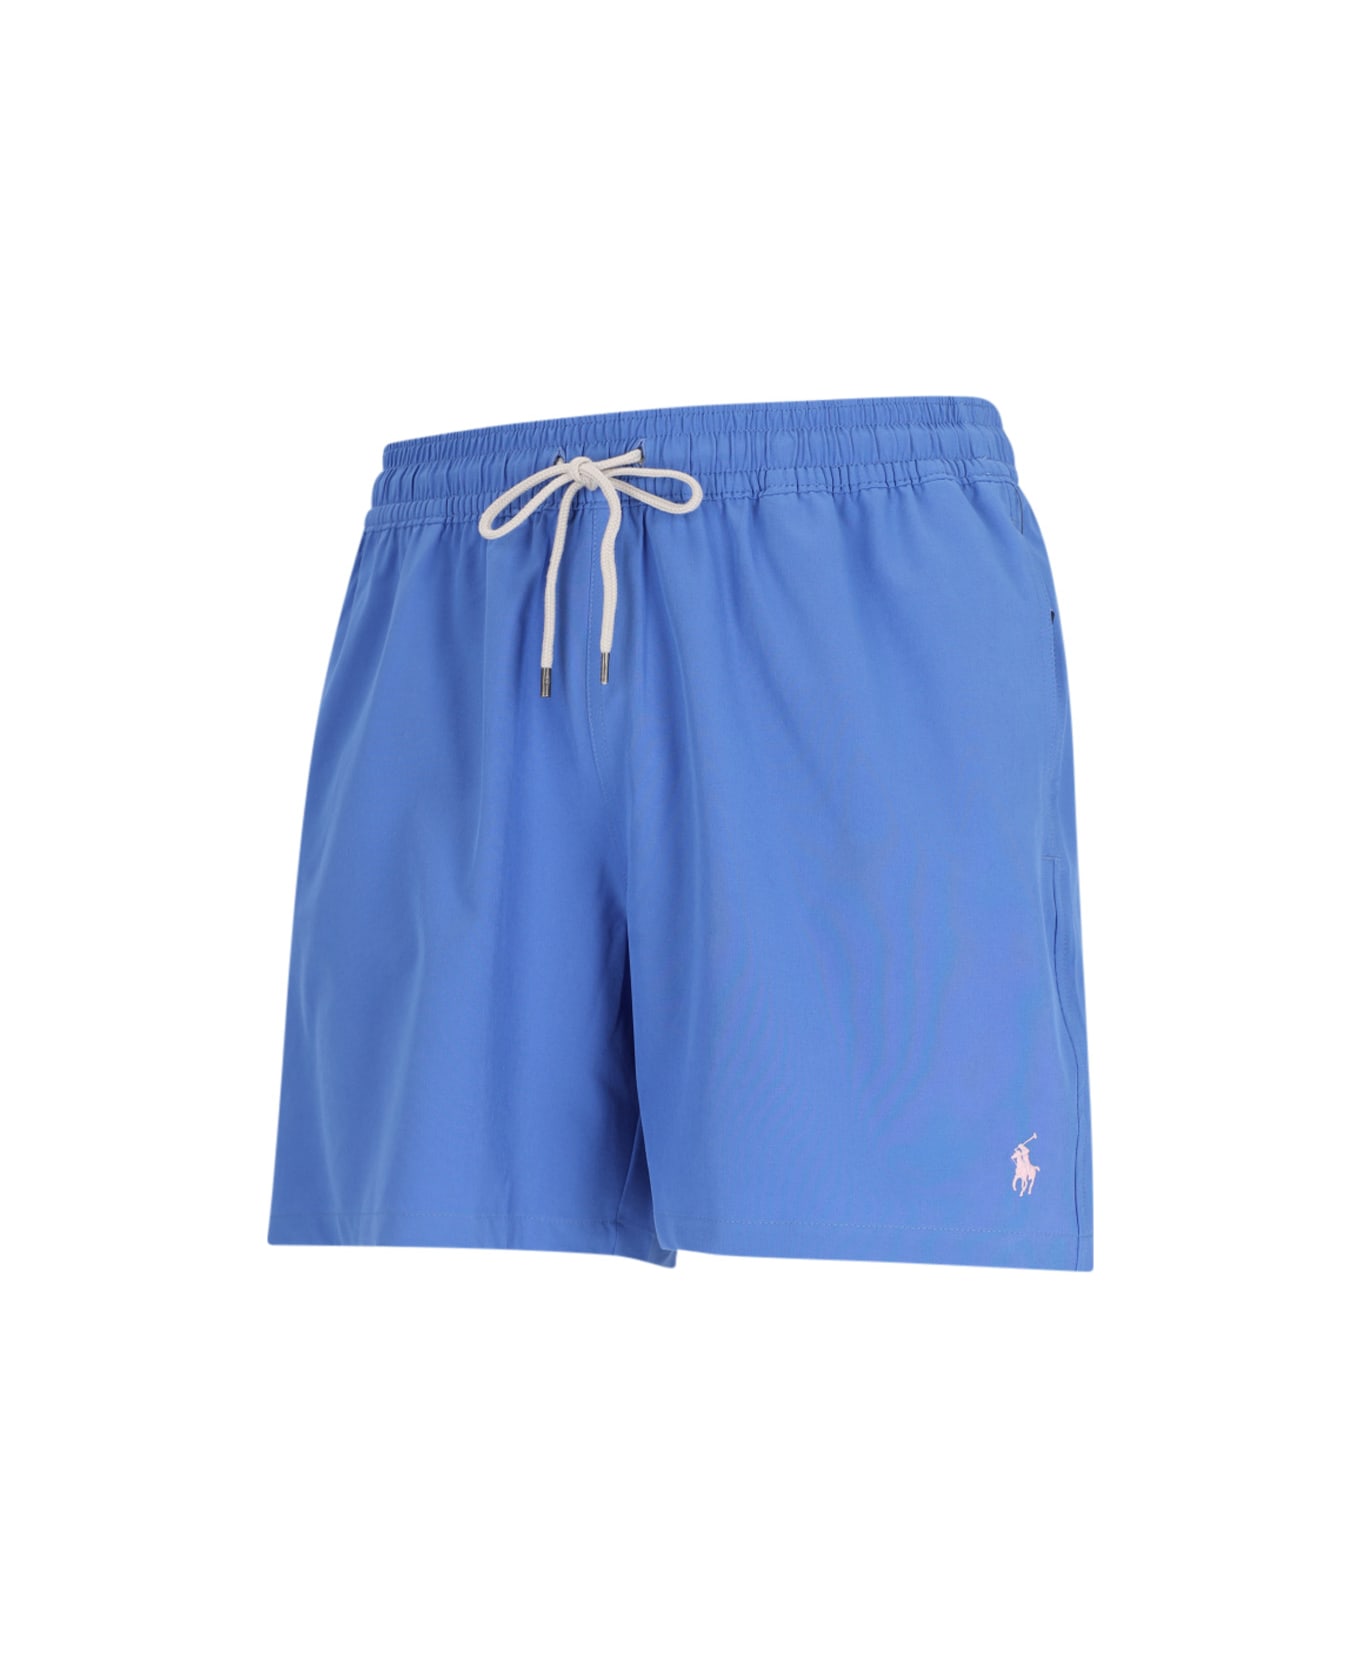 Polo Ralph Lauren 'traveler' Swim Shorts - Blue